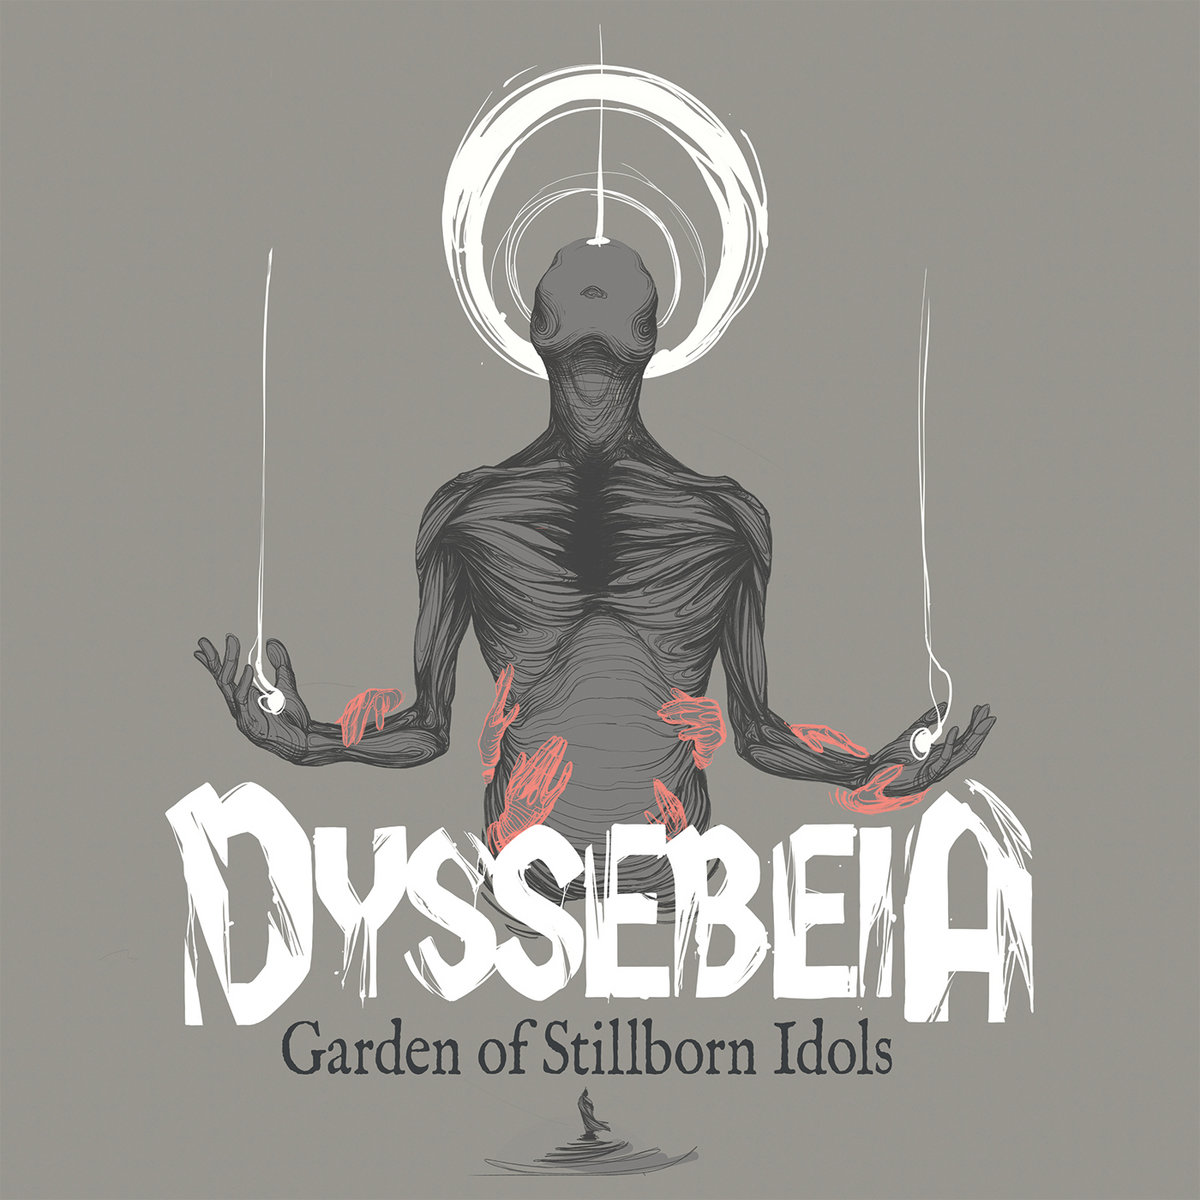 Dyssebeia: Garden of Stillborn Idols